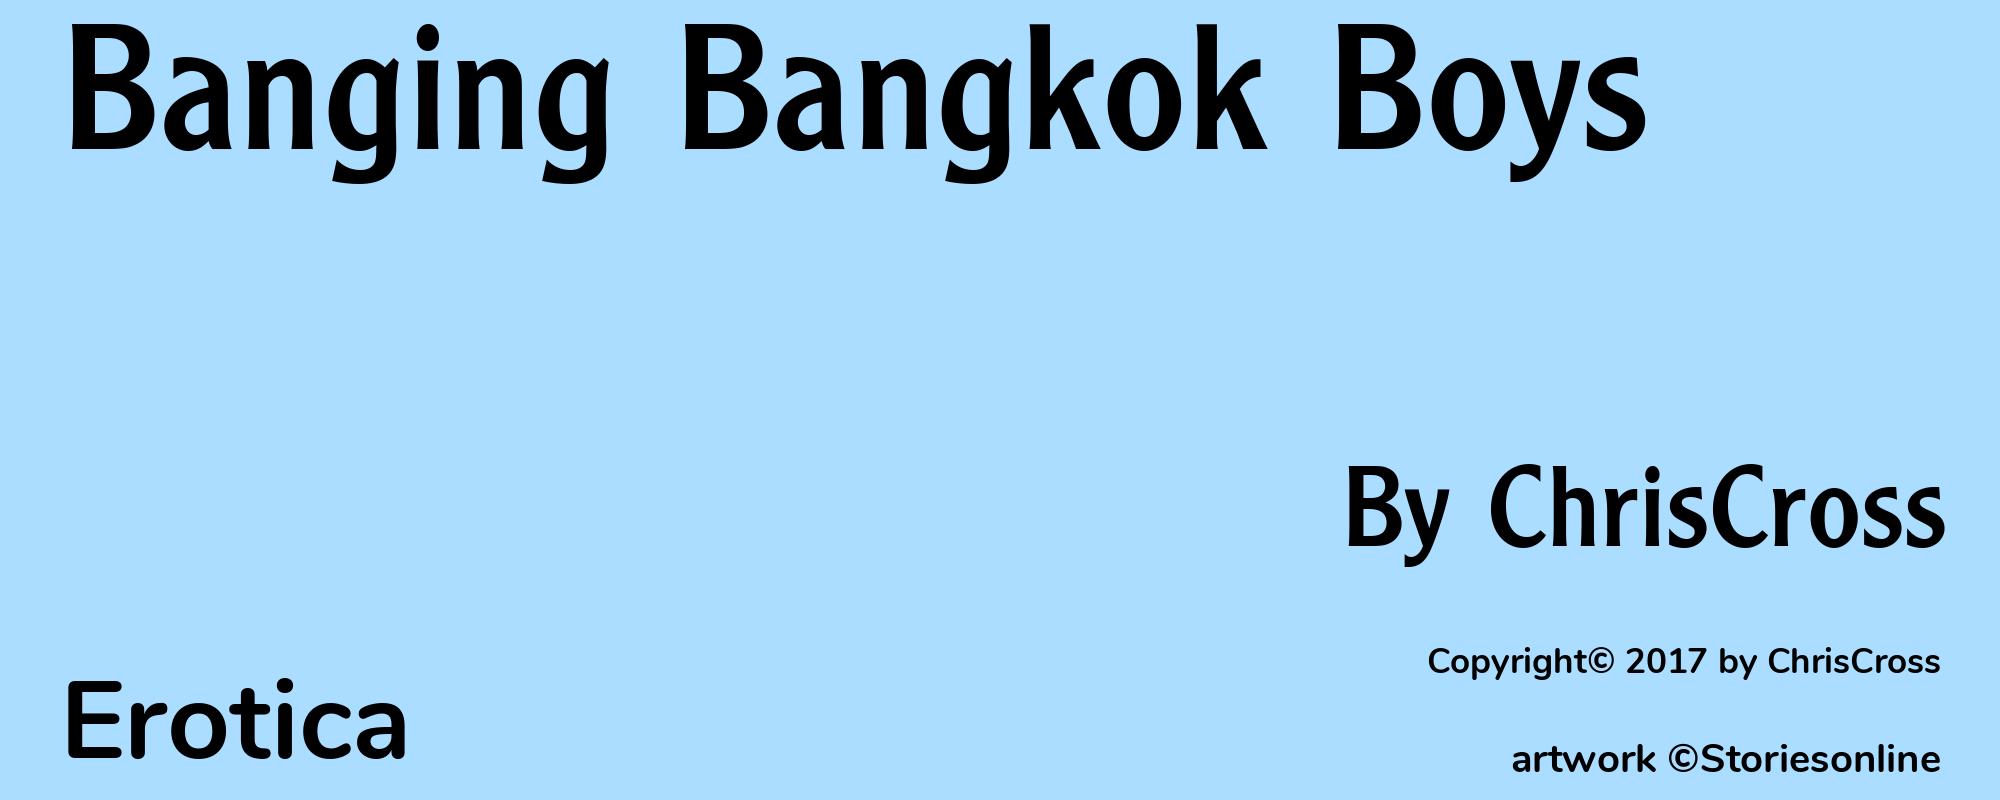 Banging Bangkok Boys - Cover